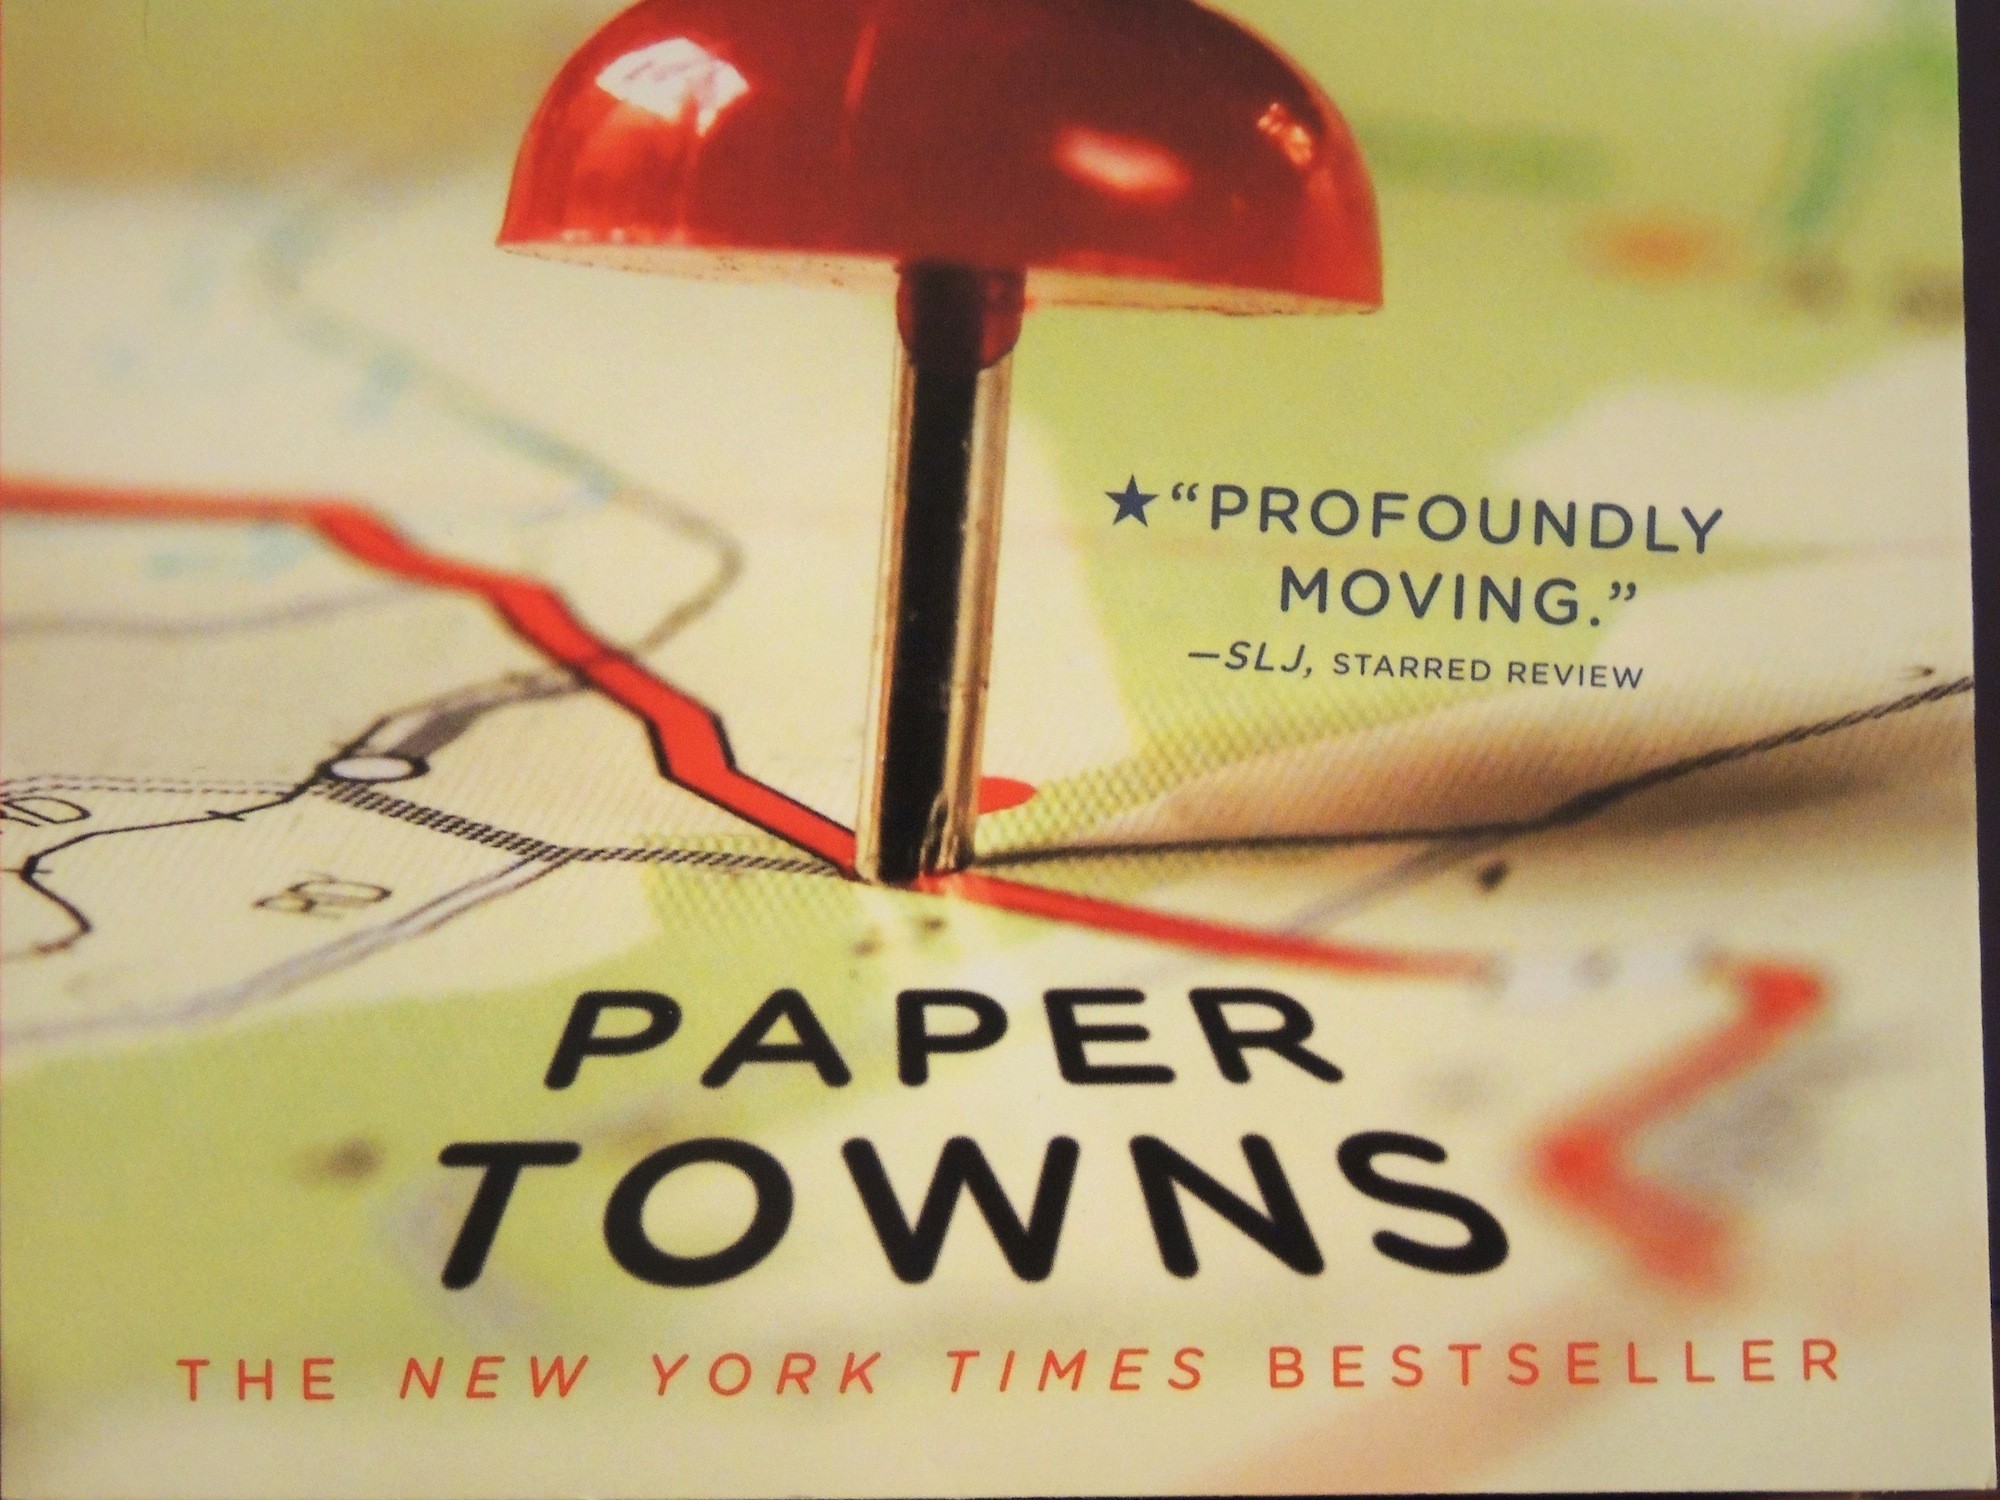 paper towns free movie online